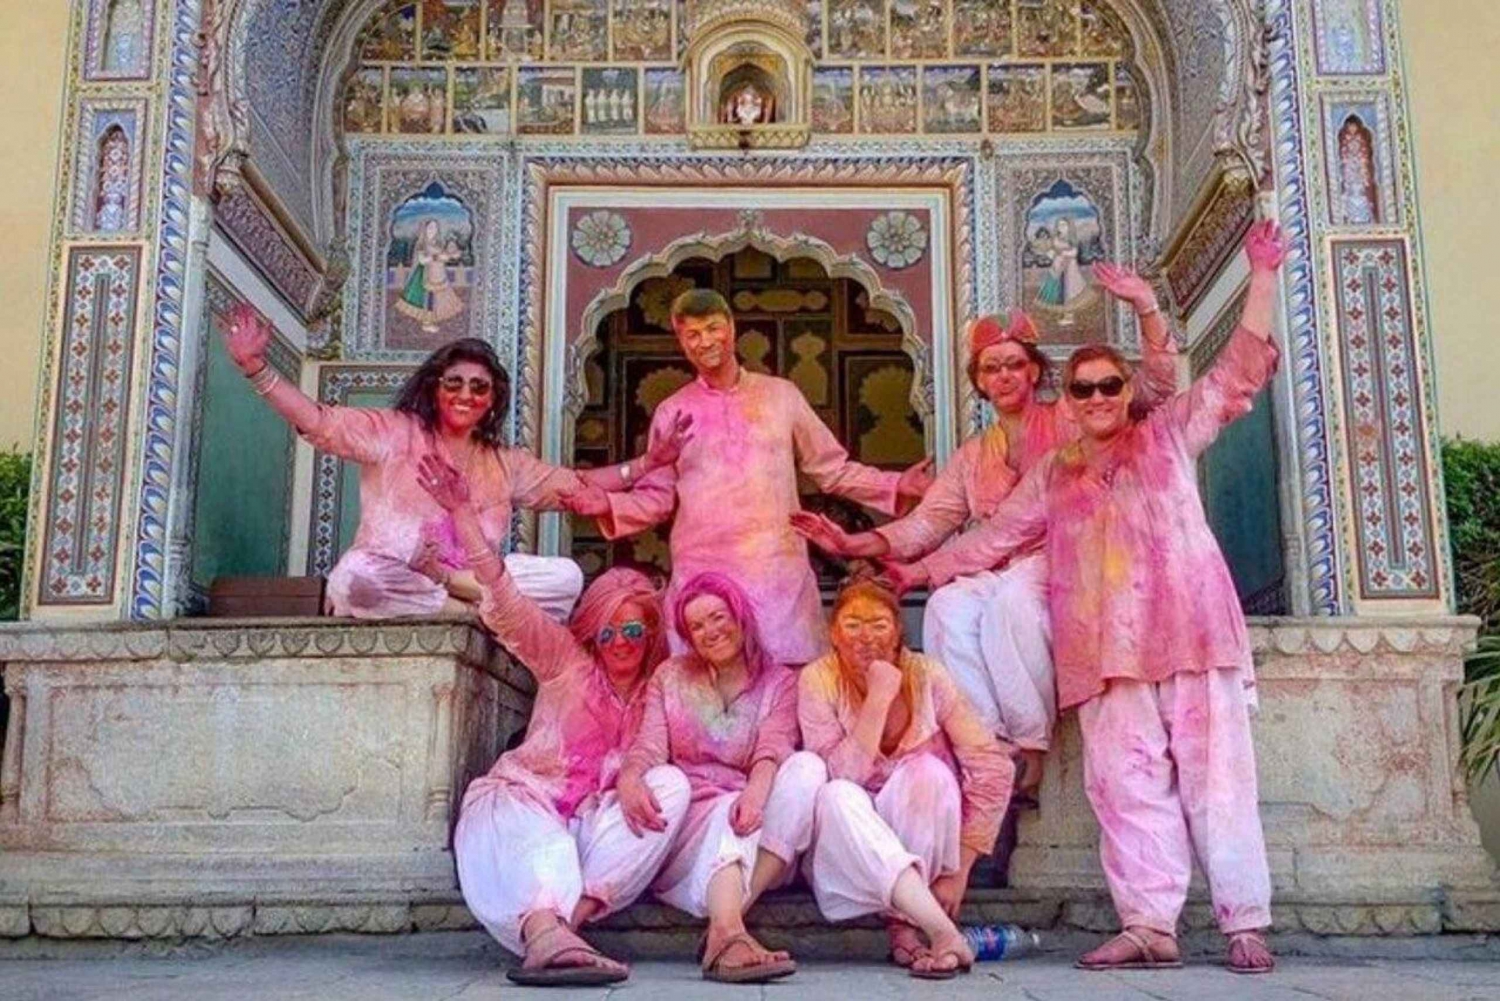 Celebrate Holi with Locals in Jaipur